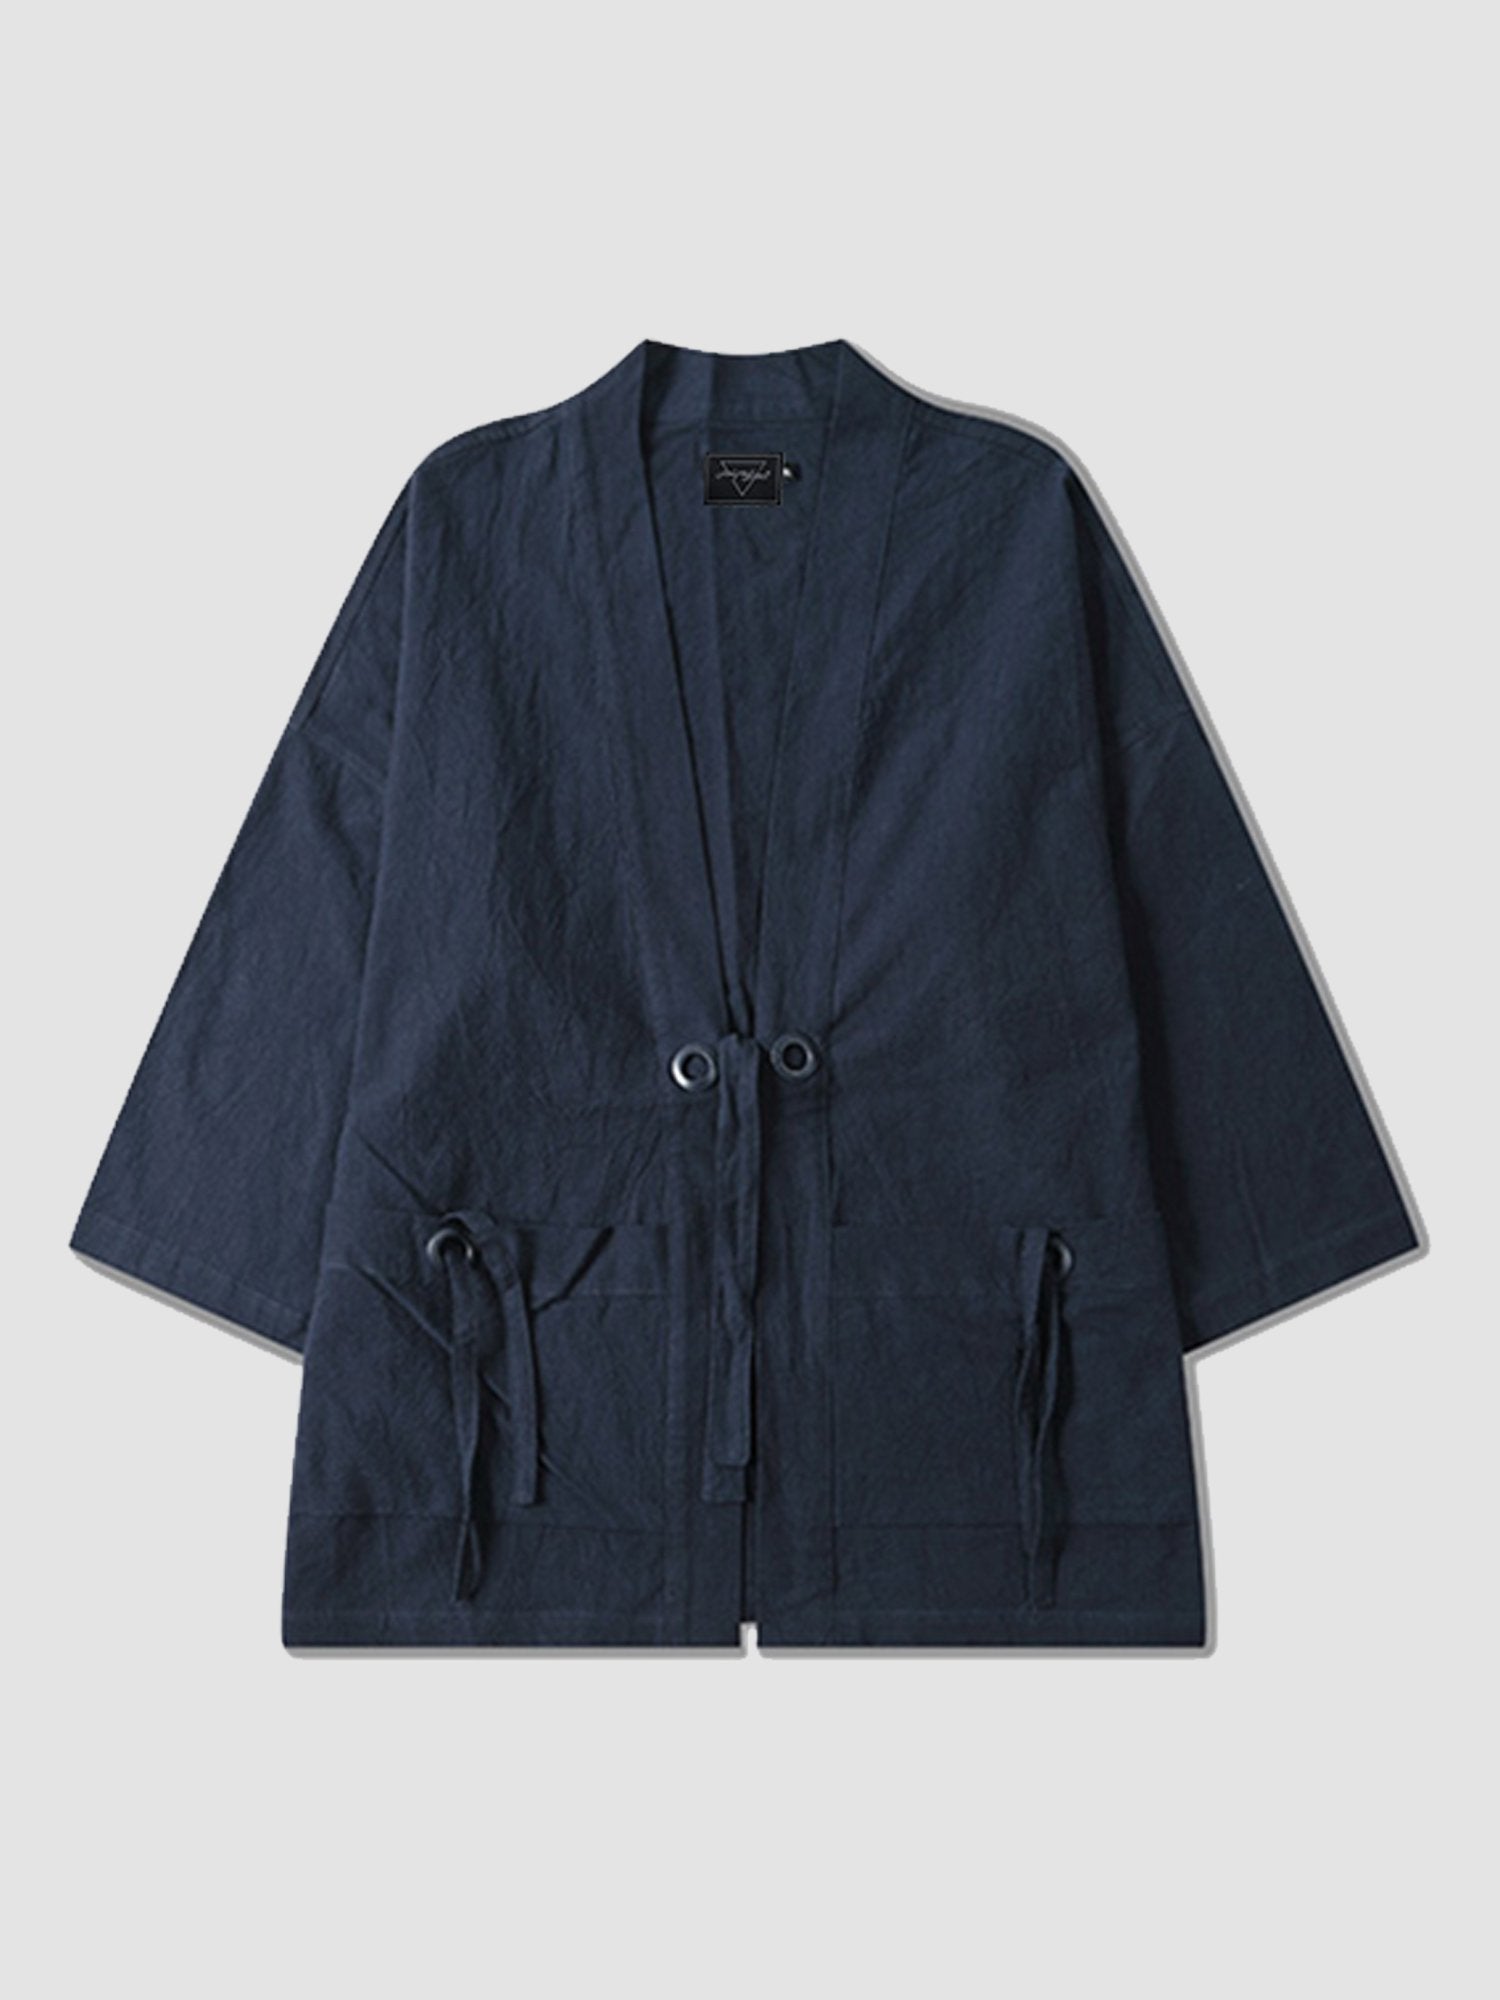 JUSTNOTAG Thin Kimono Cardigan Half Sleeve Shirts